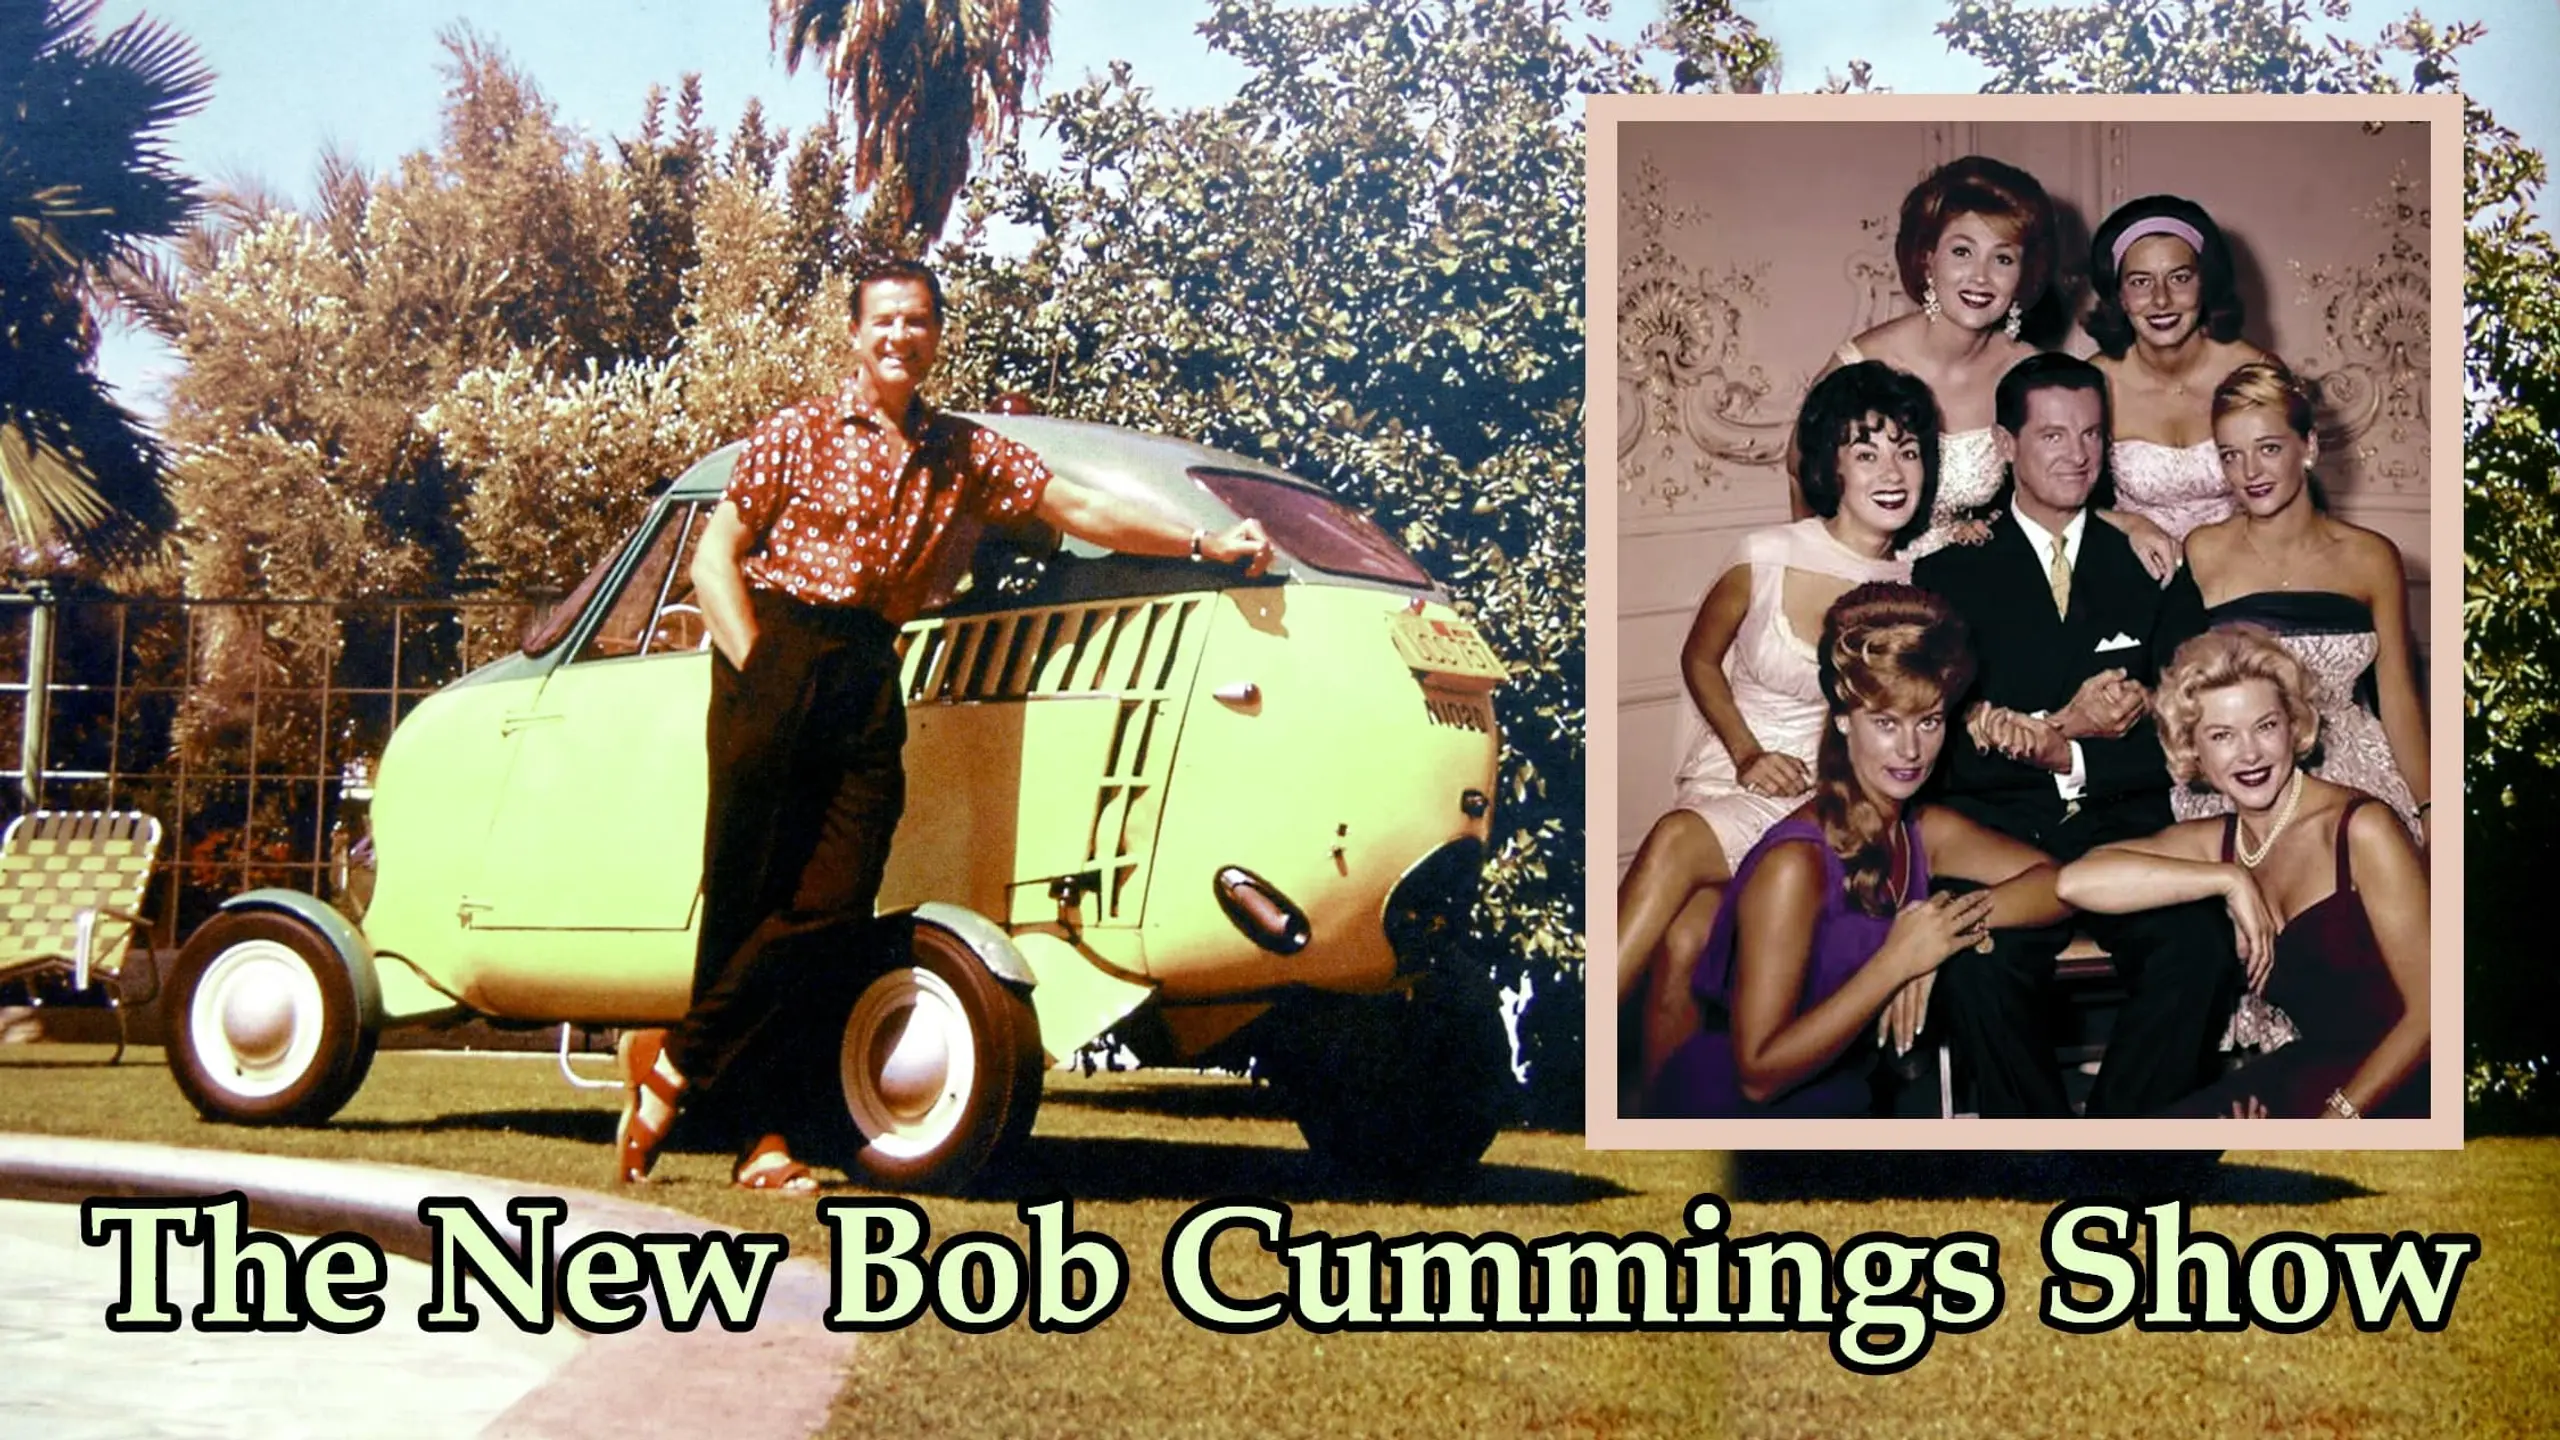 The New Bob Cummings Show